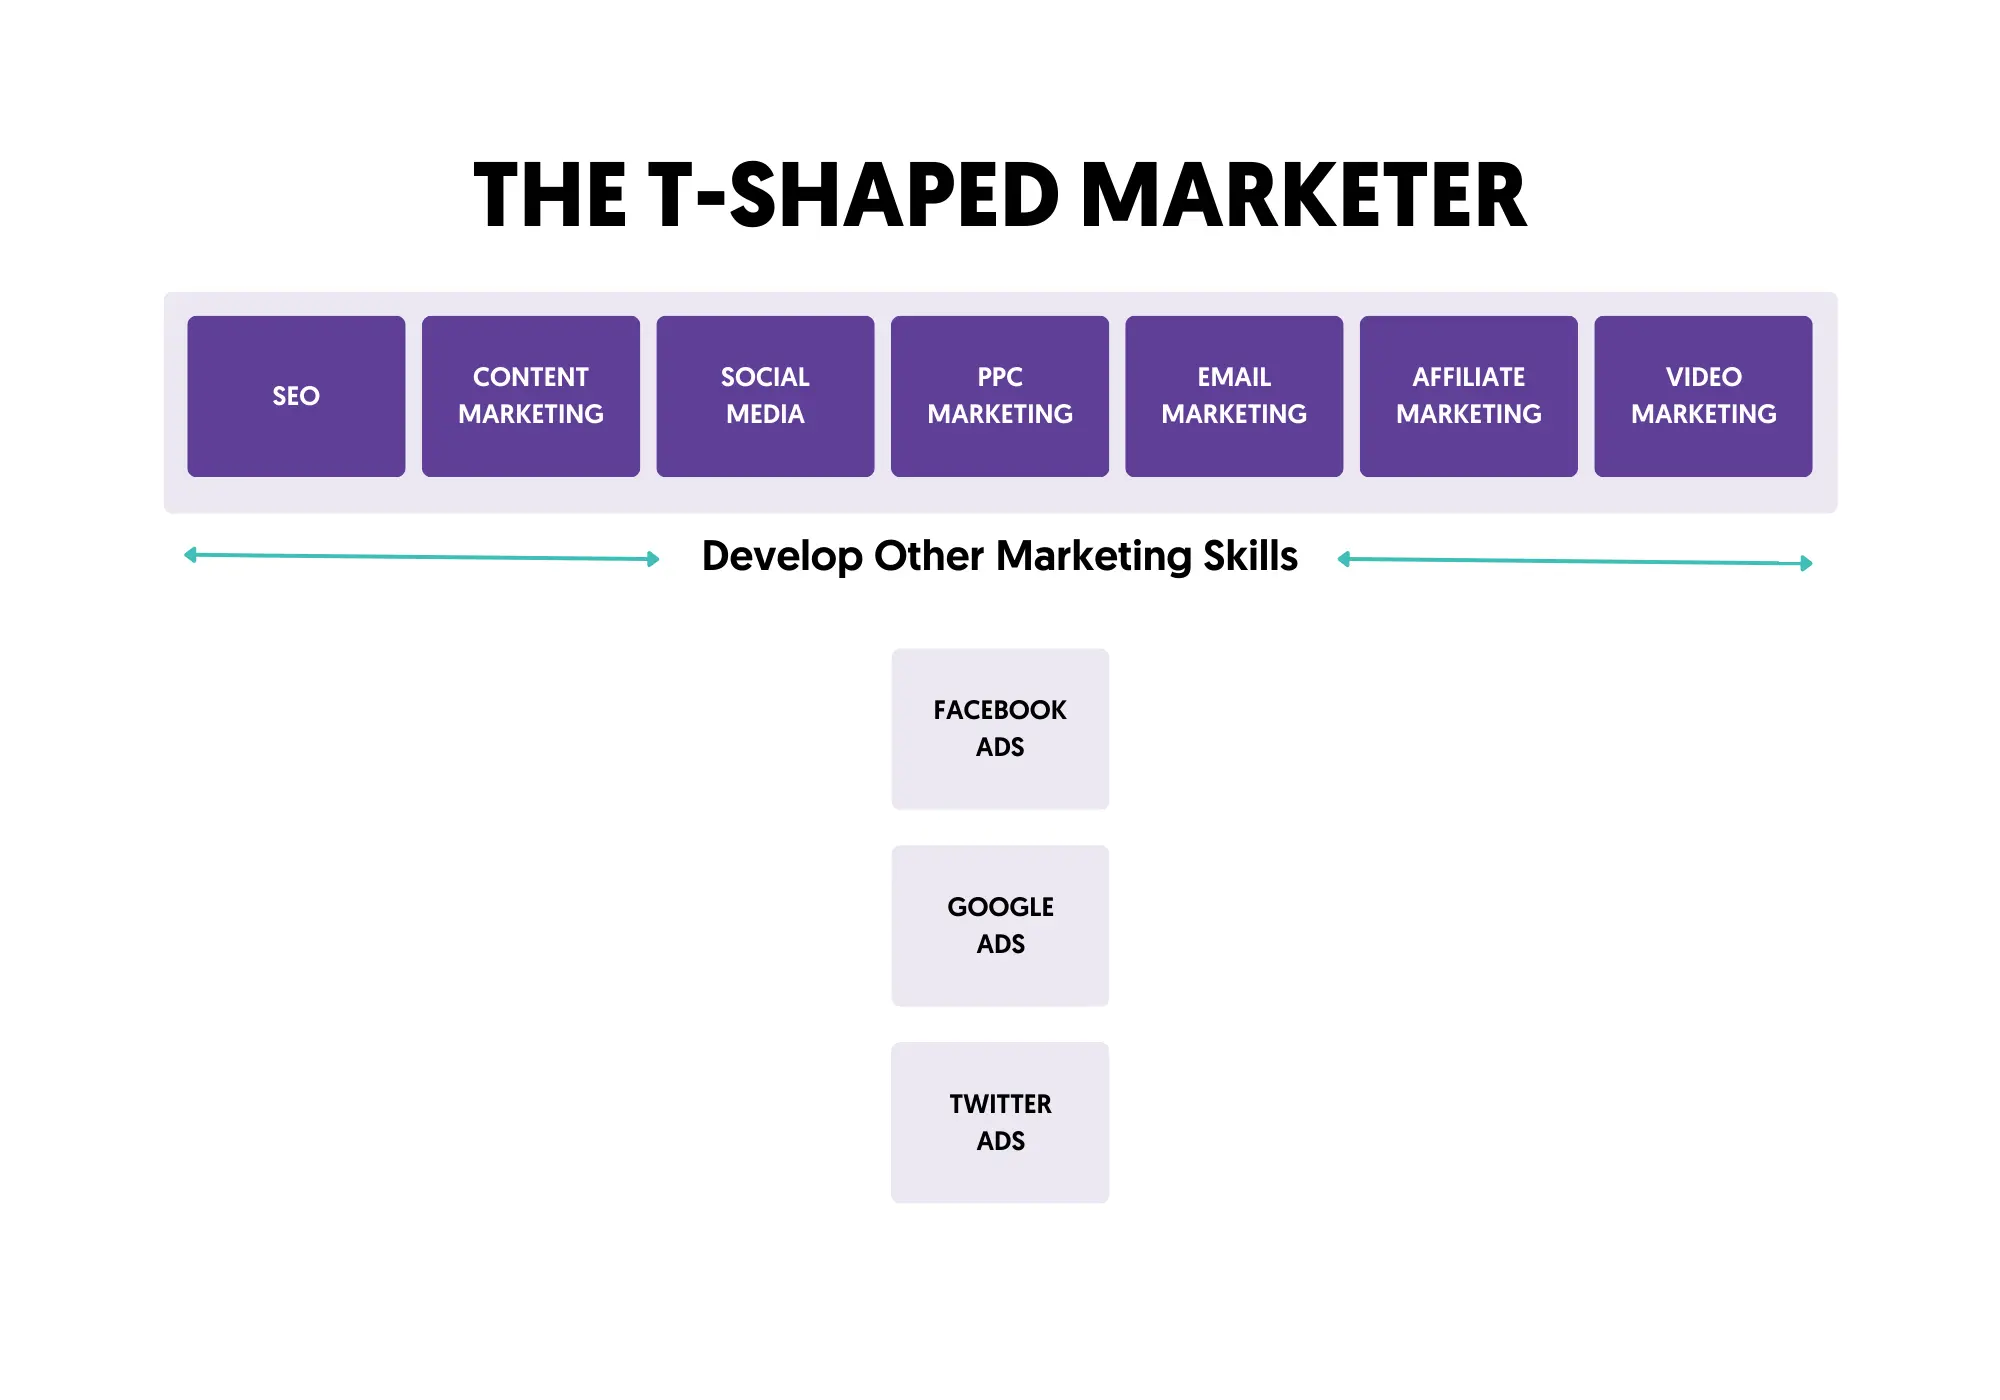 Develop Other Marketing Skills